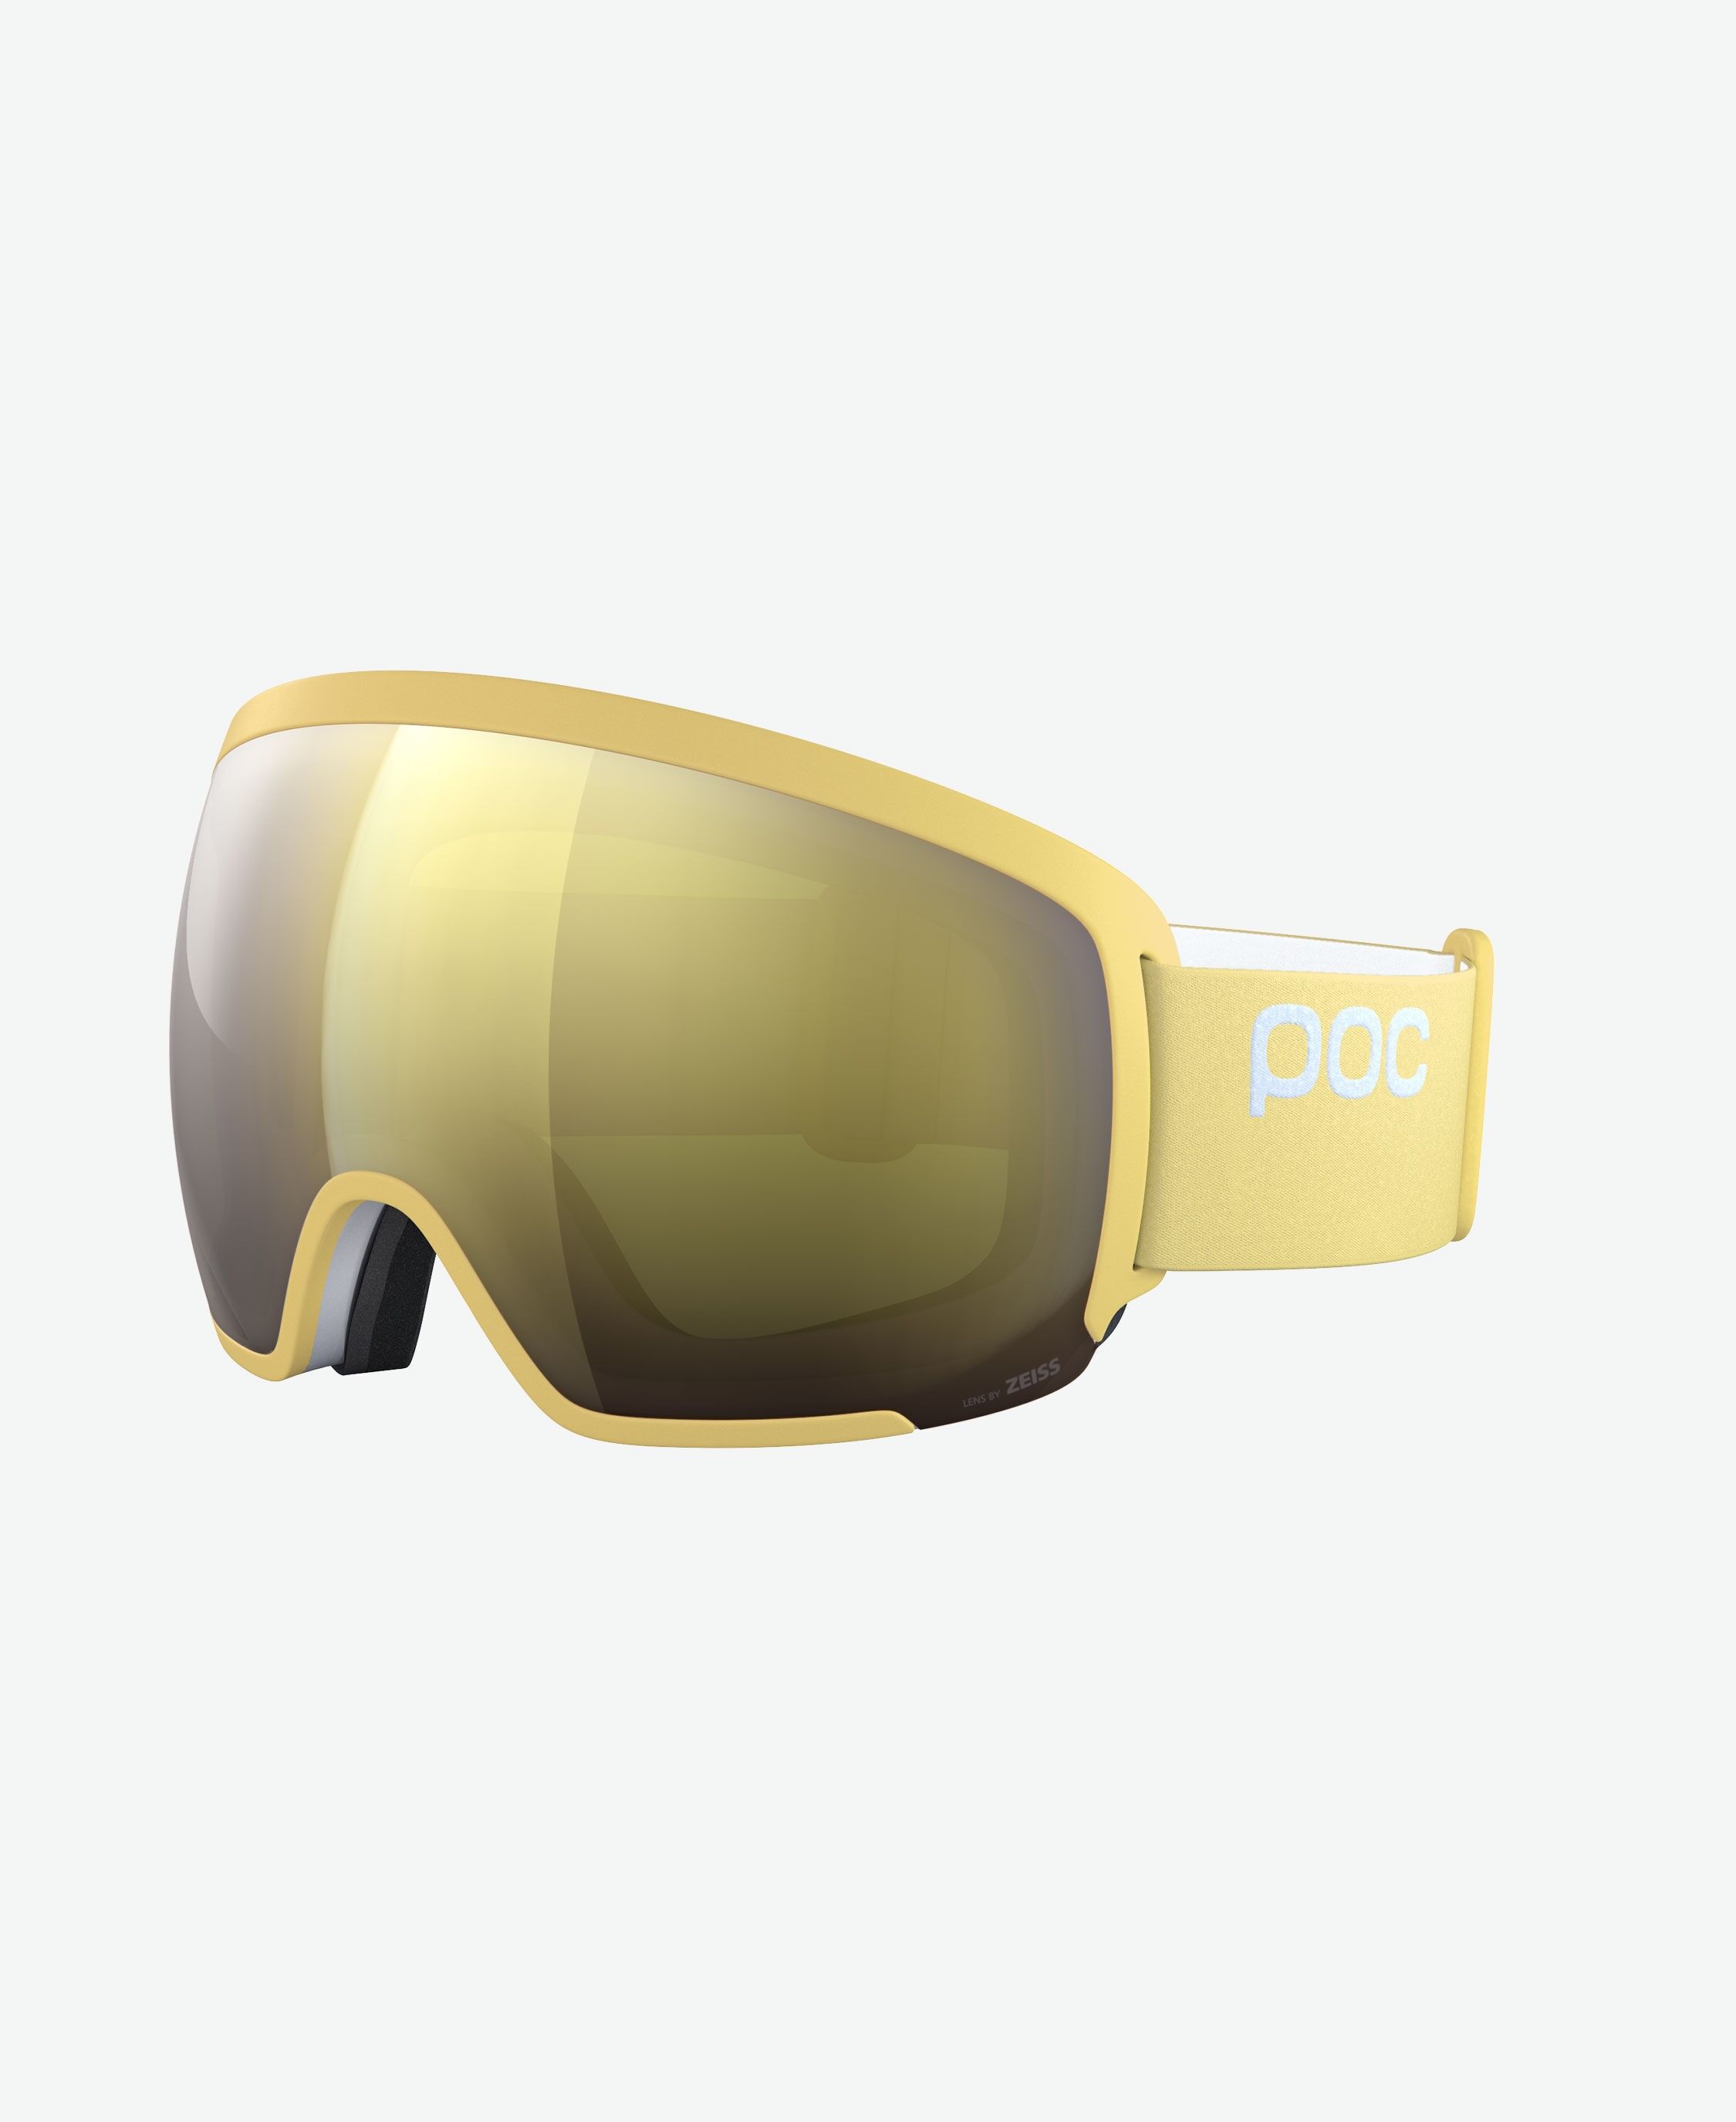 Poc Orb - Ski goggles